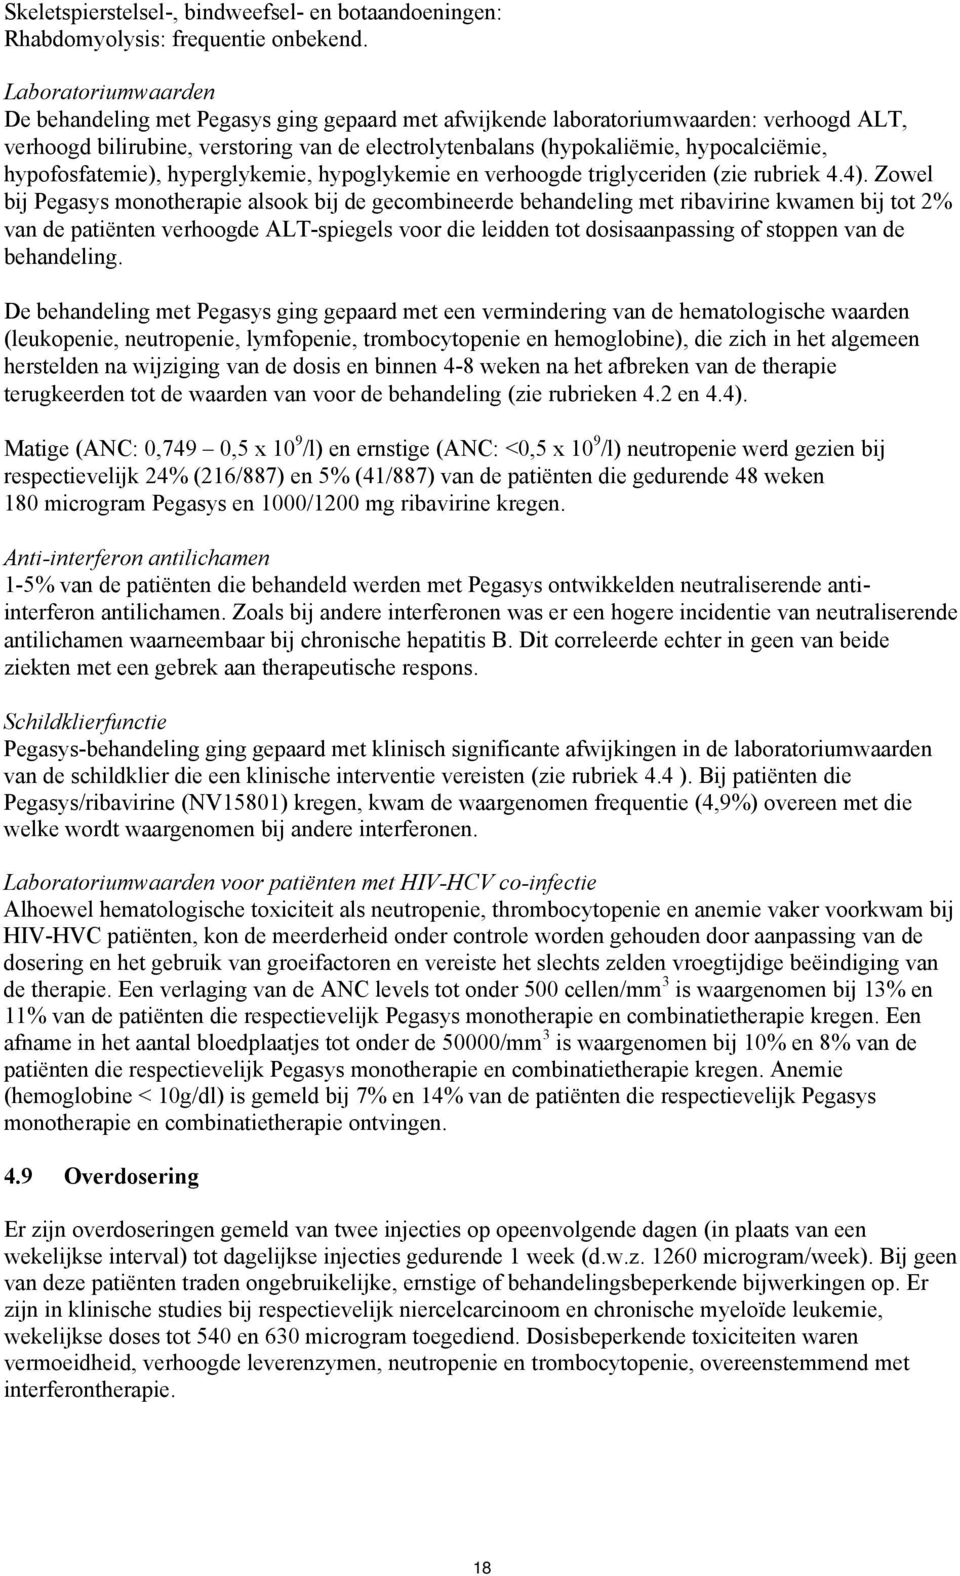 hypofosfatemie), hyperglykemie, hypoglykemie en verhoogde triglyceriden (zie rubriek 4.4).